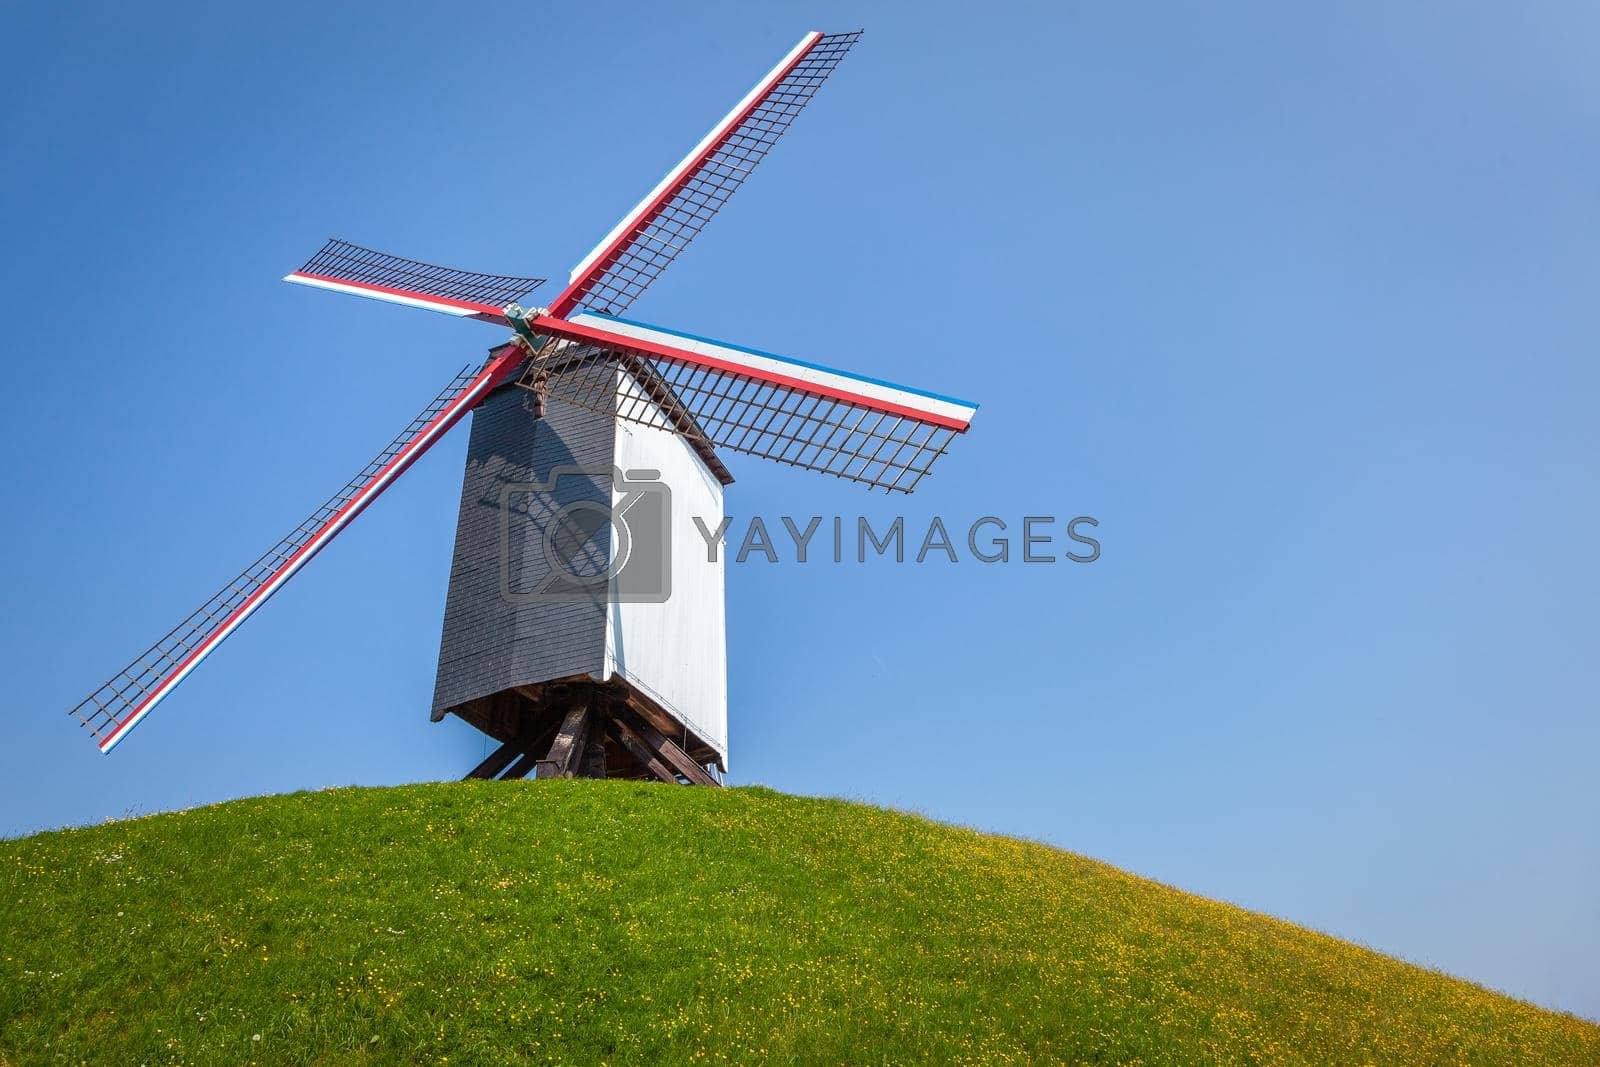 Royalty free image of Rustic wooden windmills in idyllic Bruges public park, Belgium by positivetravelart